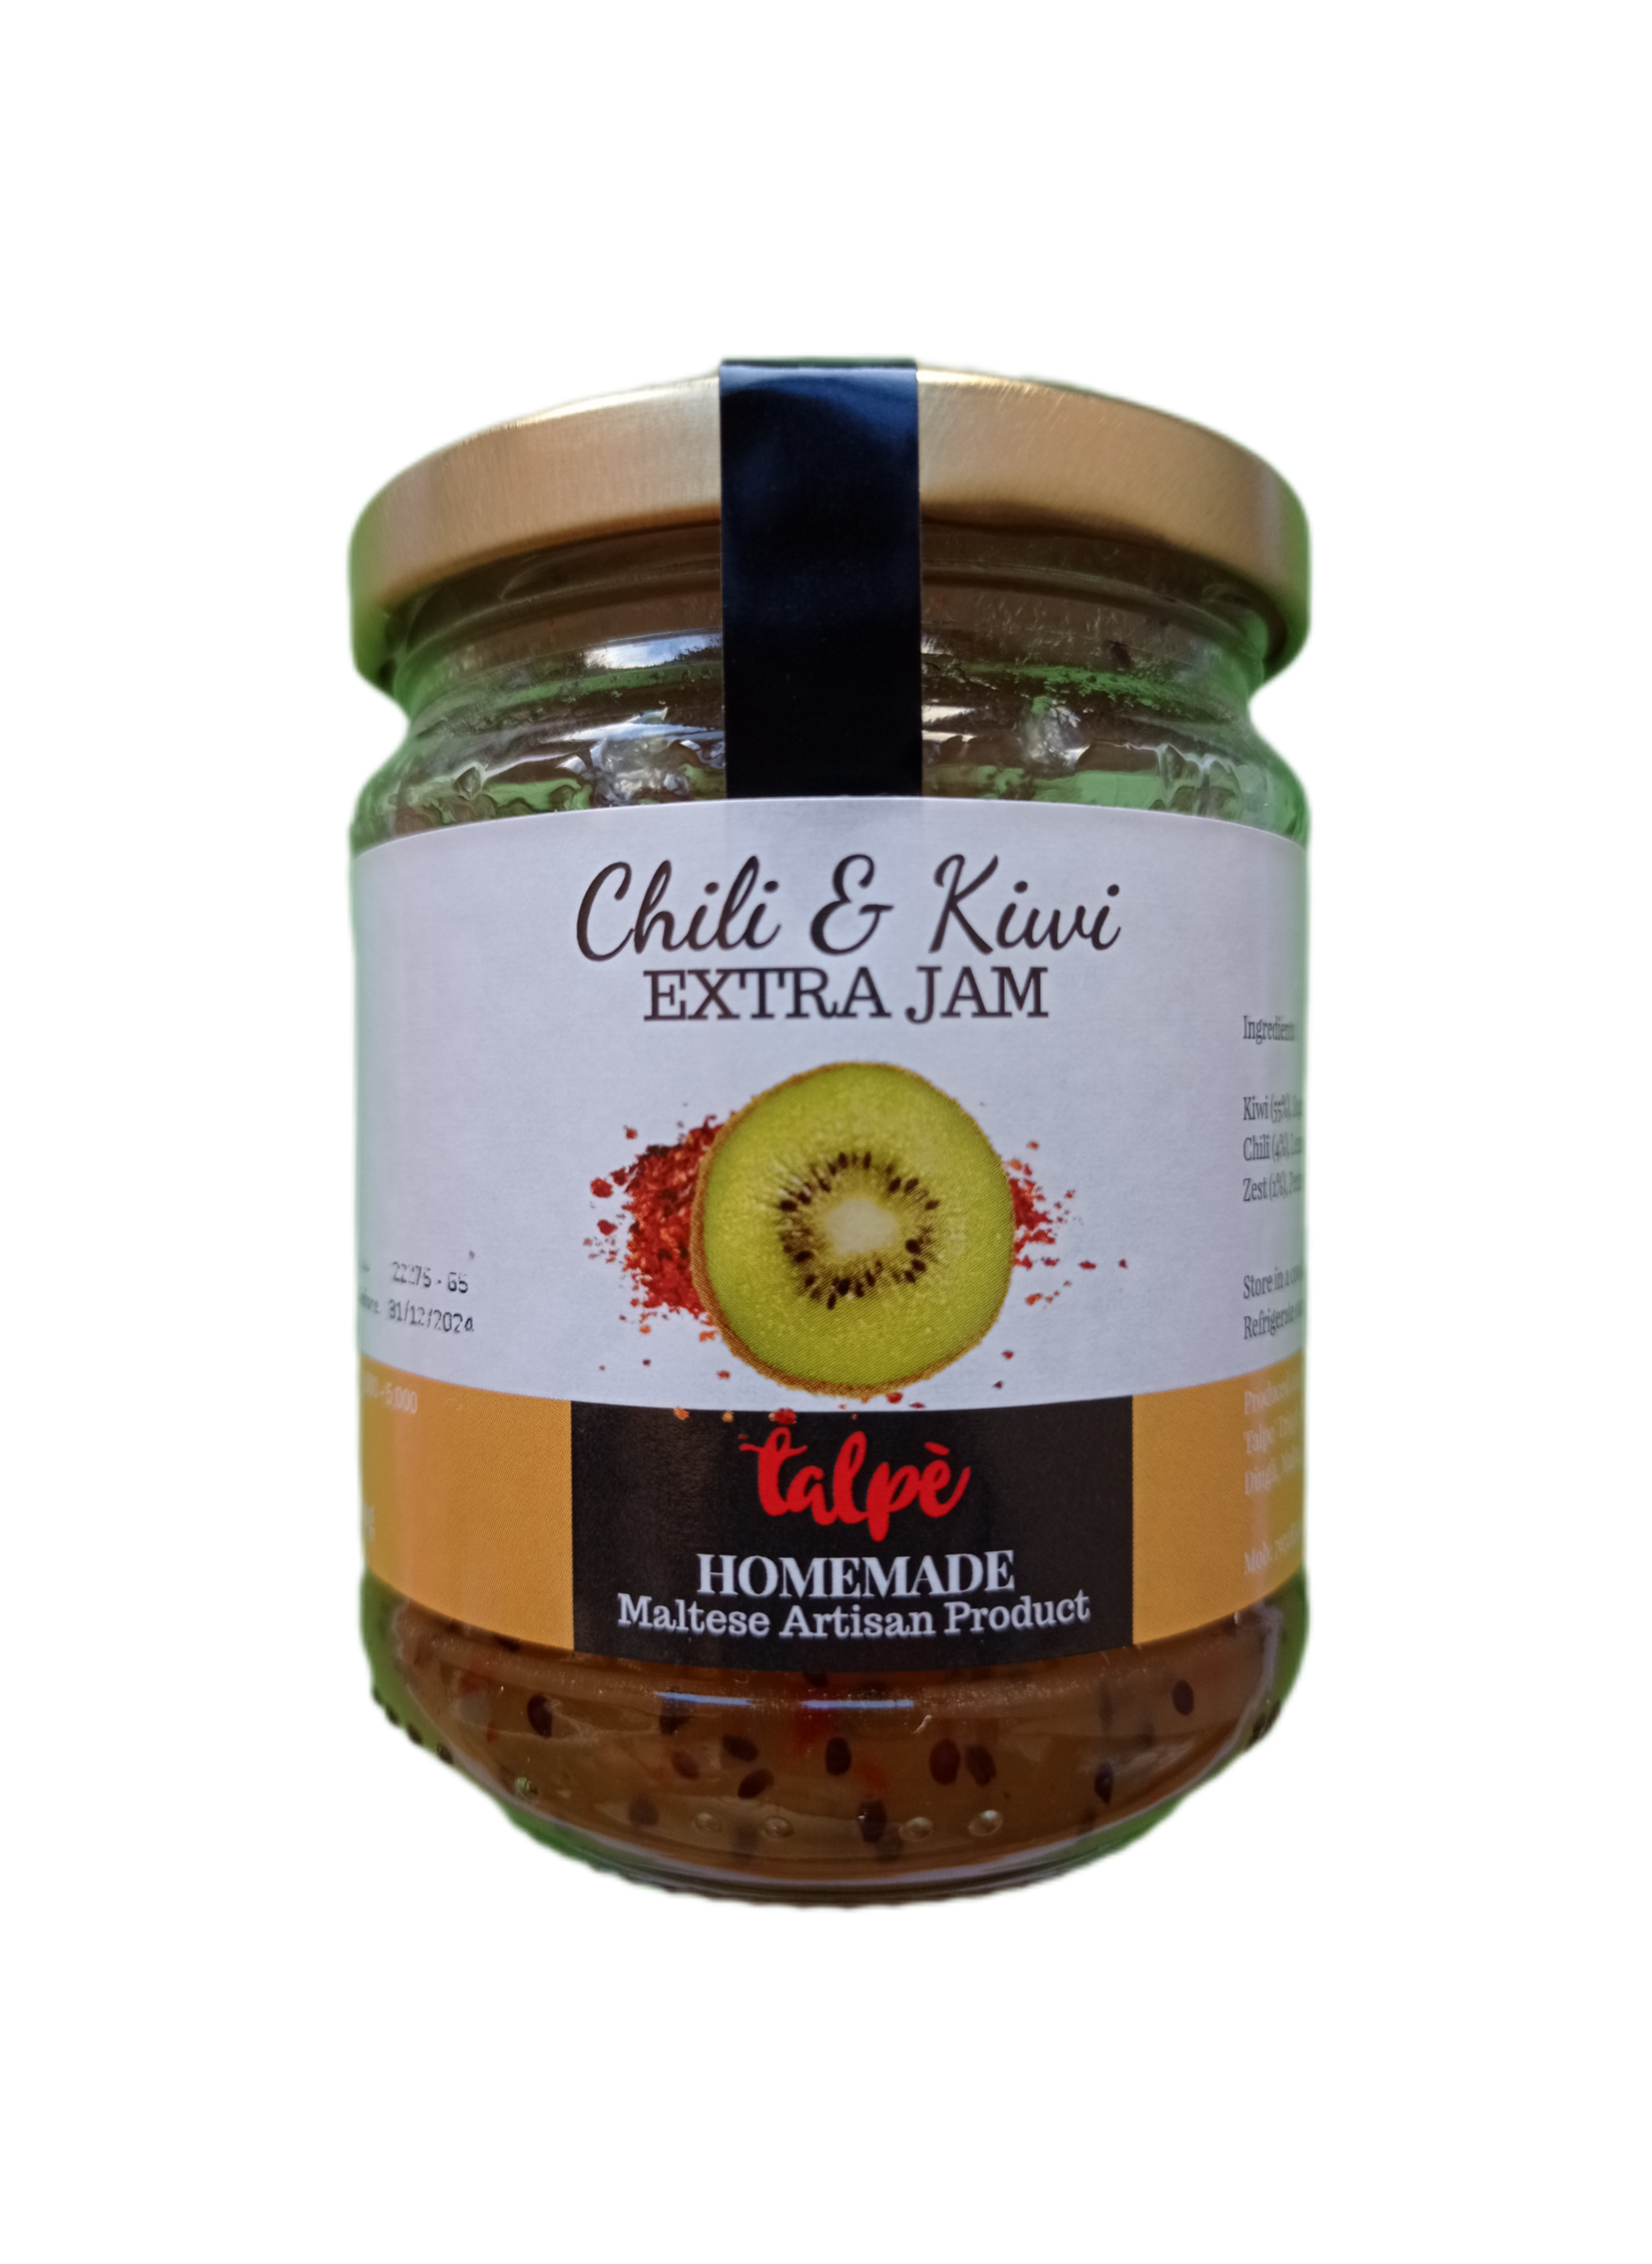 Kiwi & Chili Jam - Local Produce Gift Items & Supplies